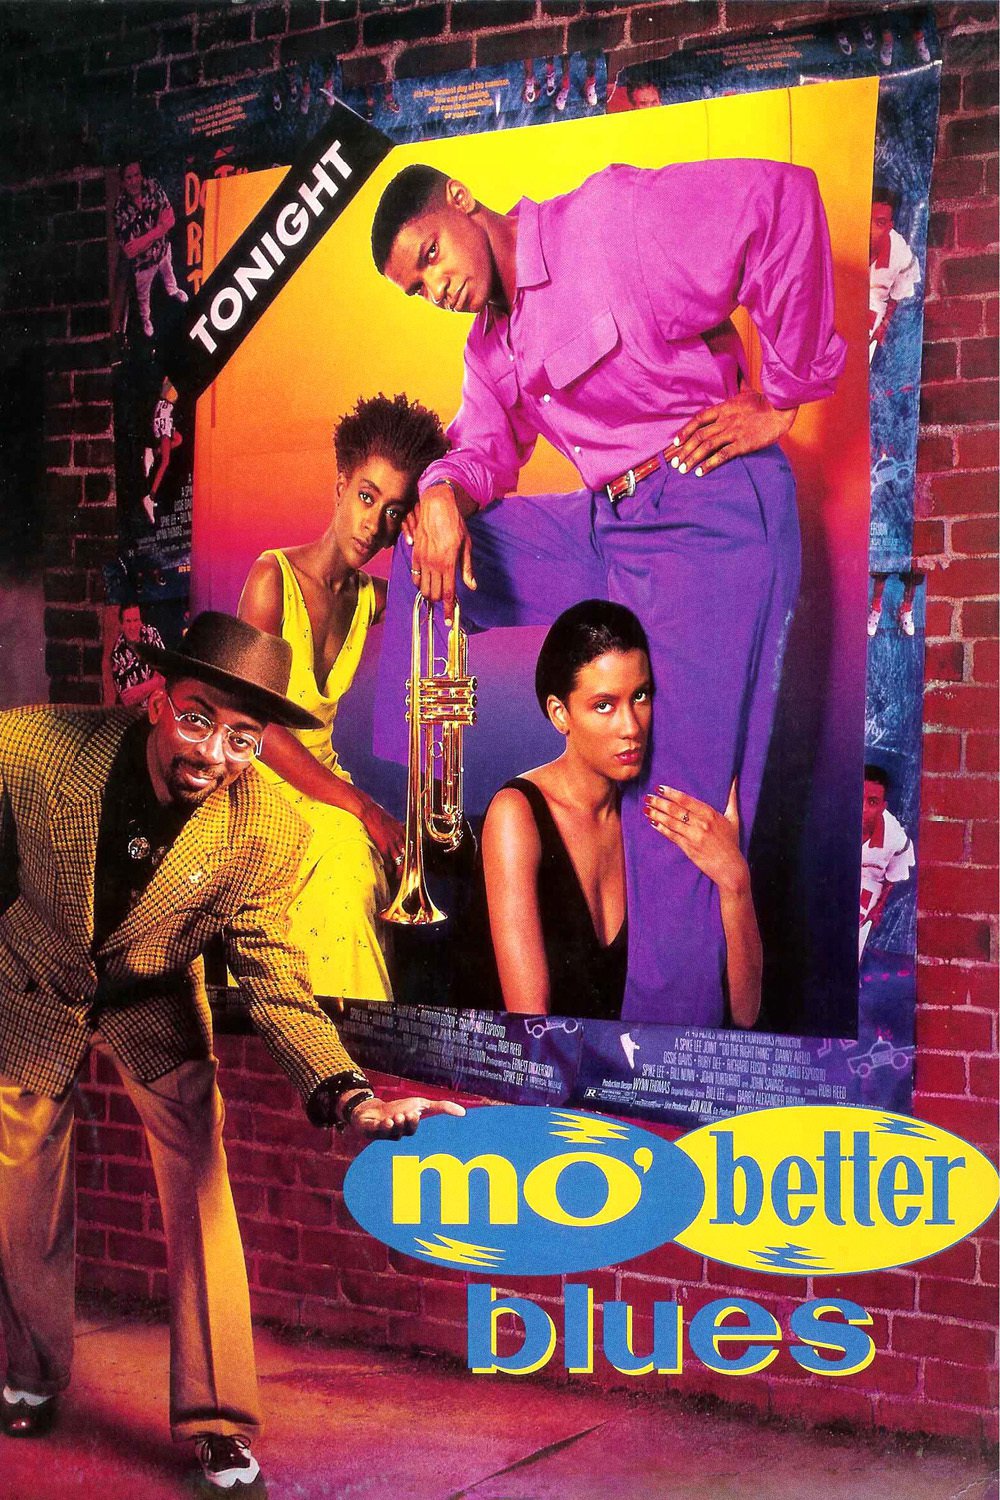 Plakat von "Mo' Better Blues"